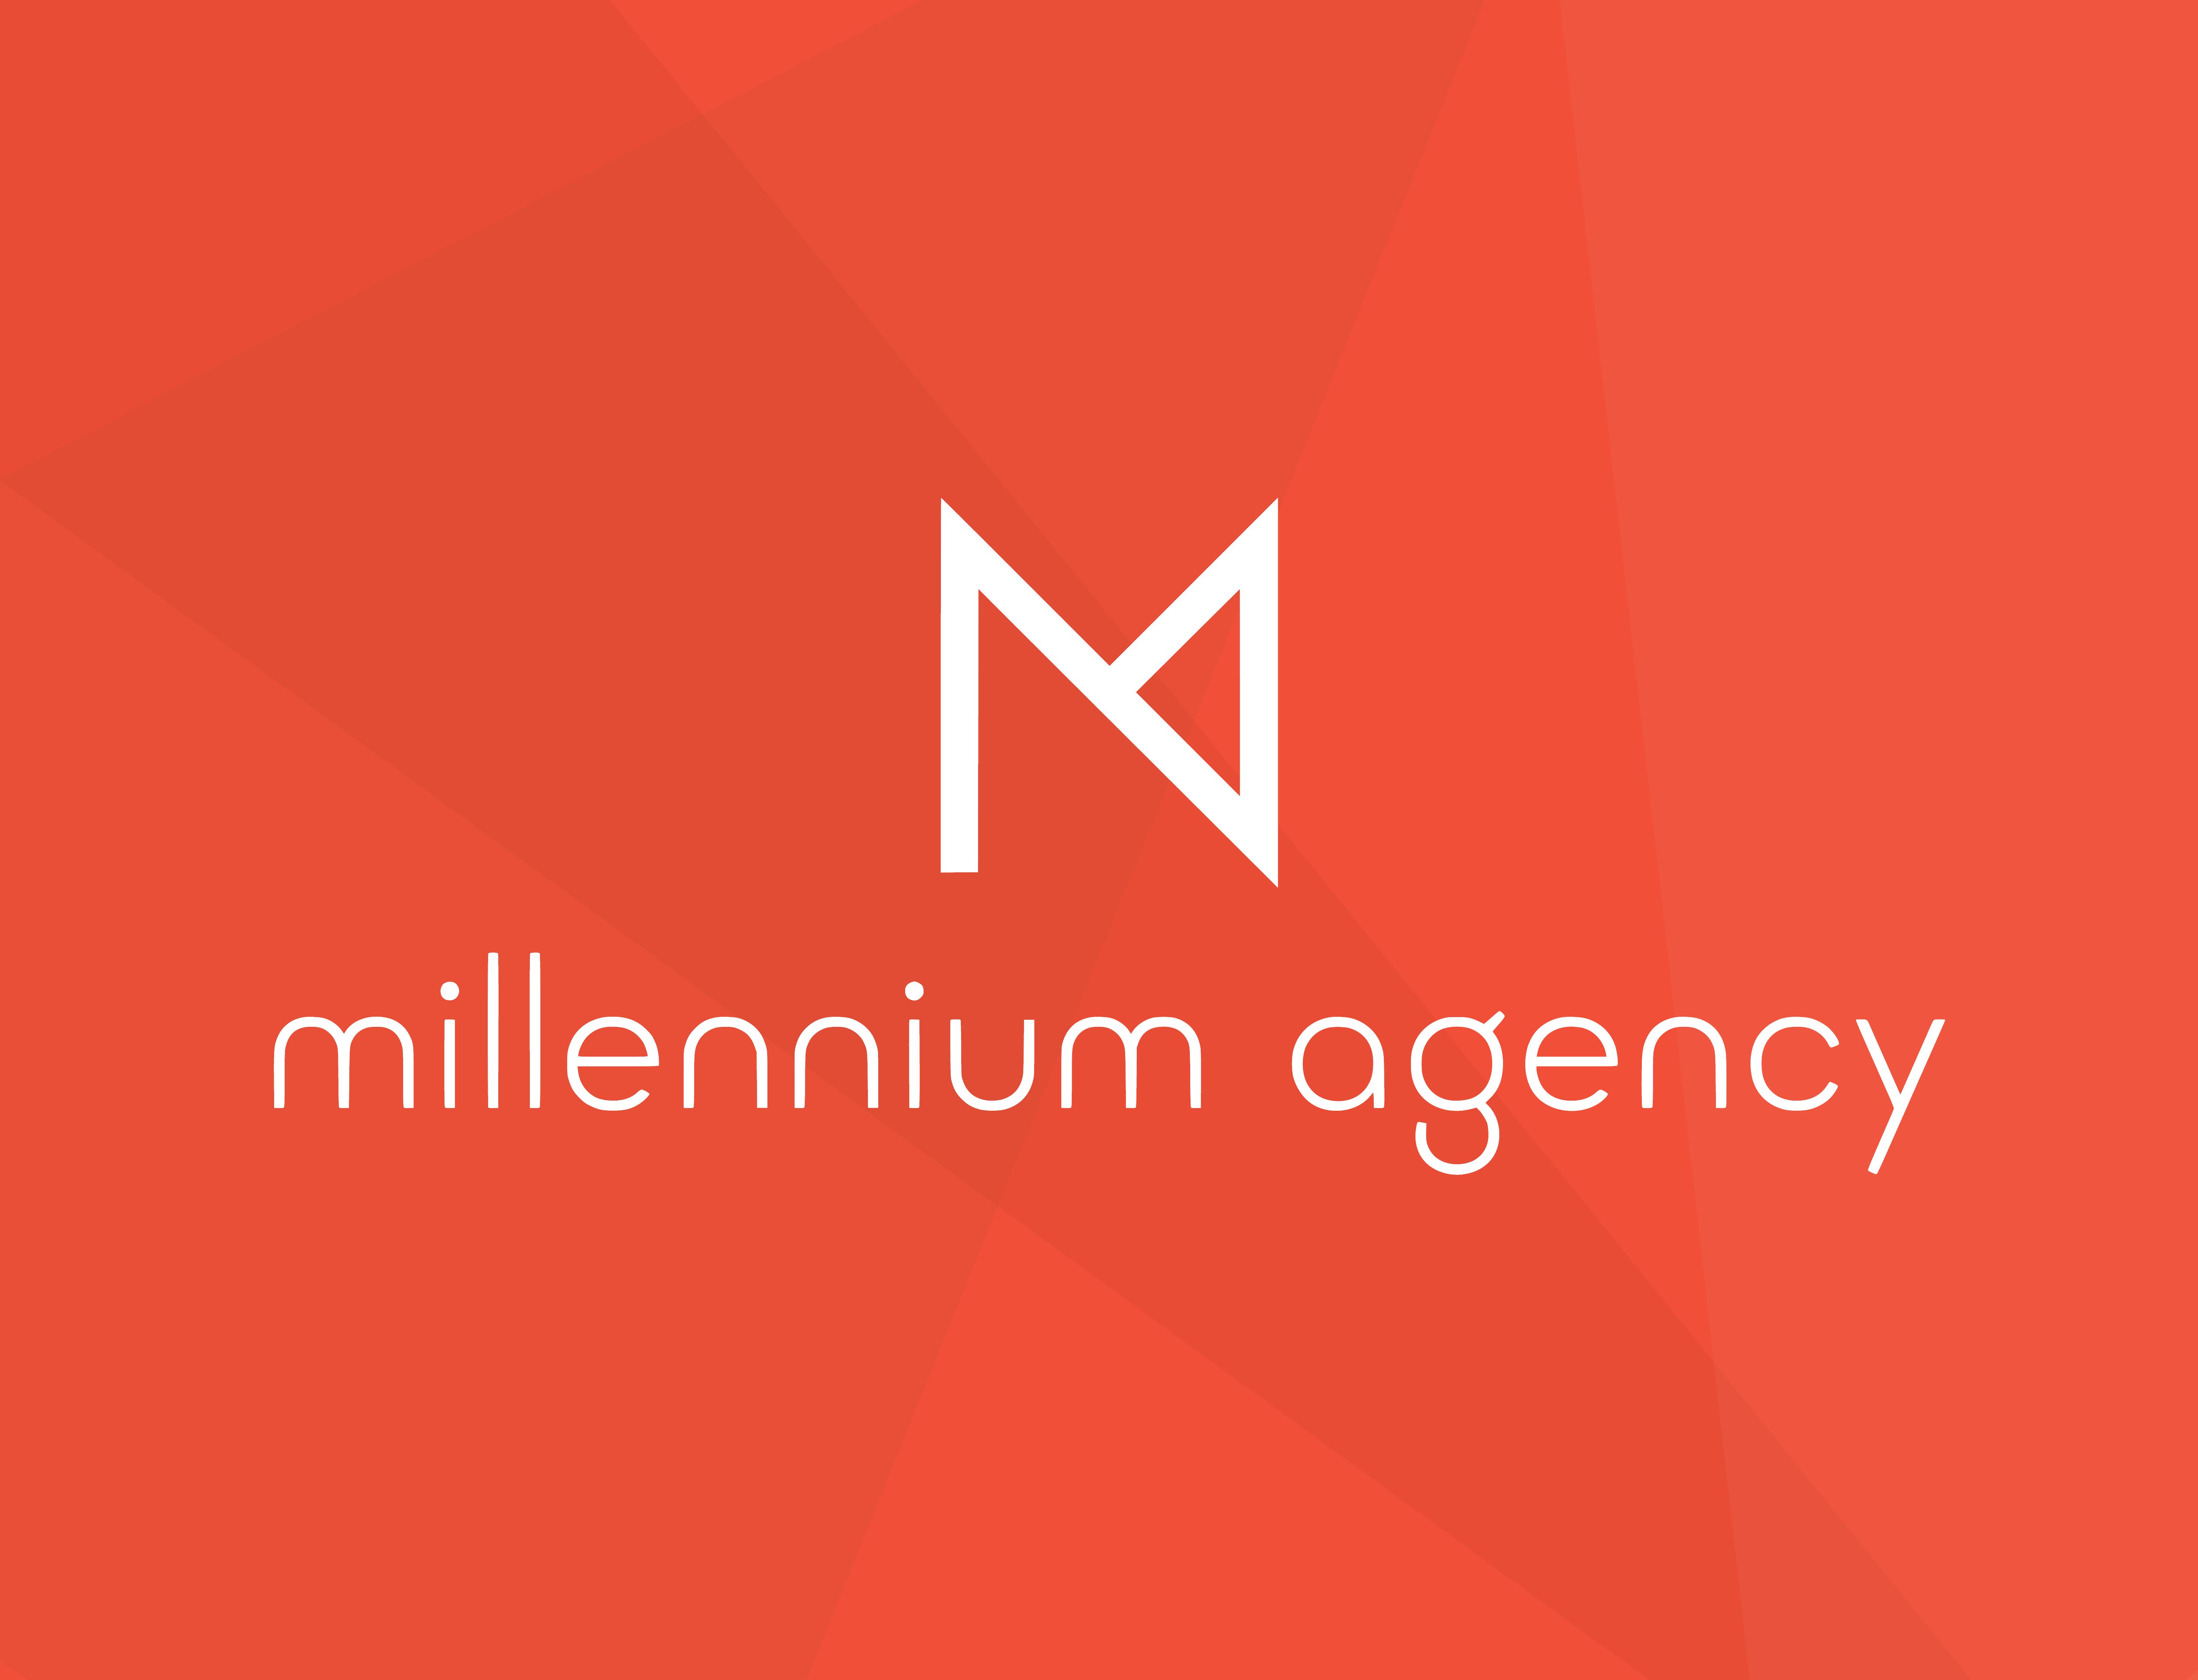 Millennium Agency